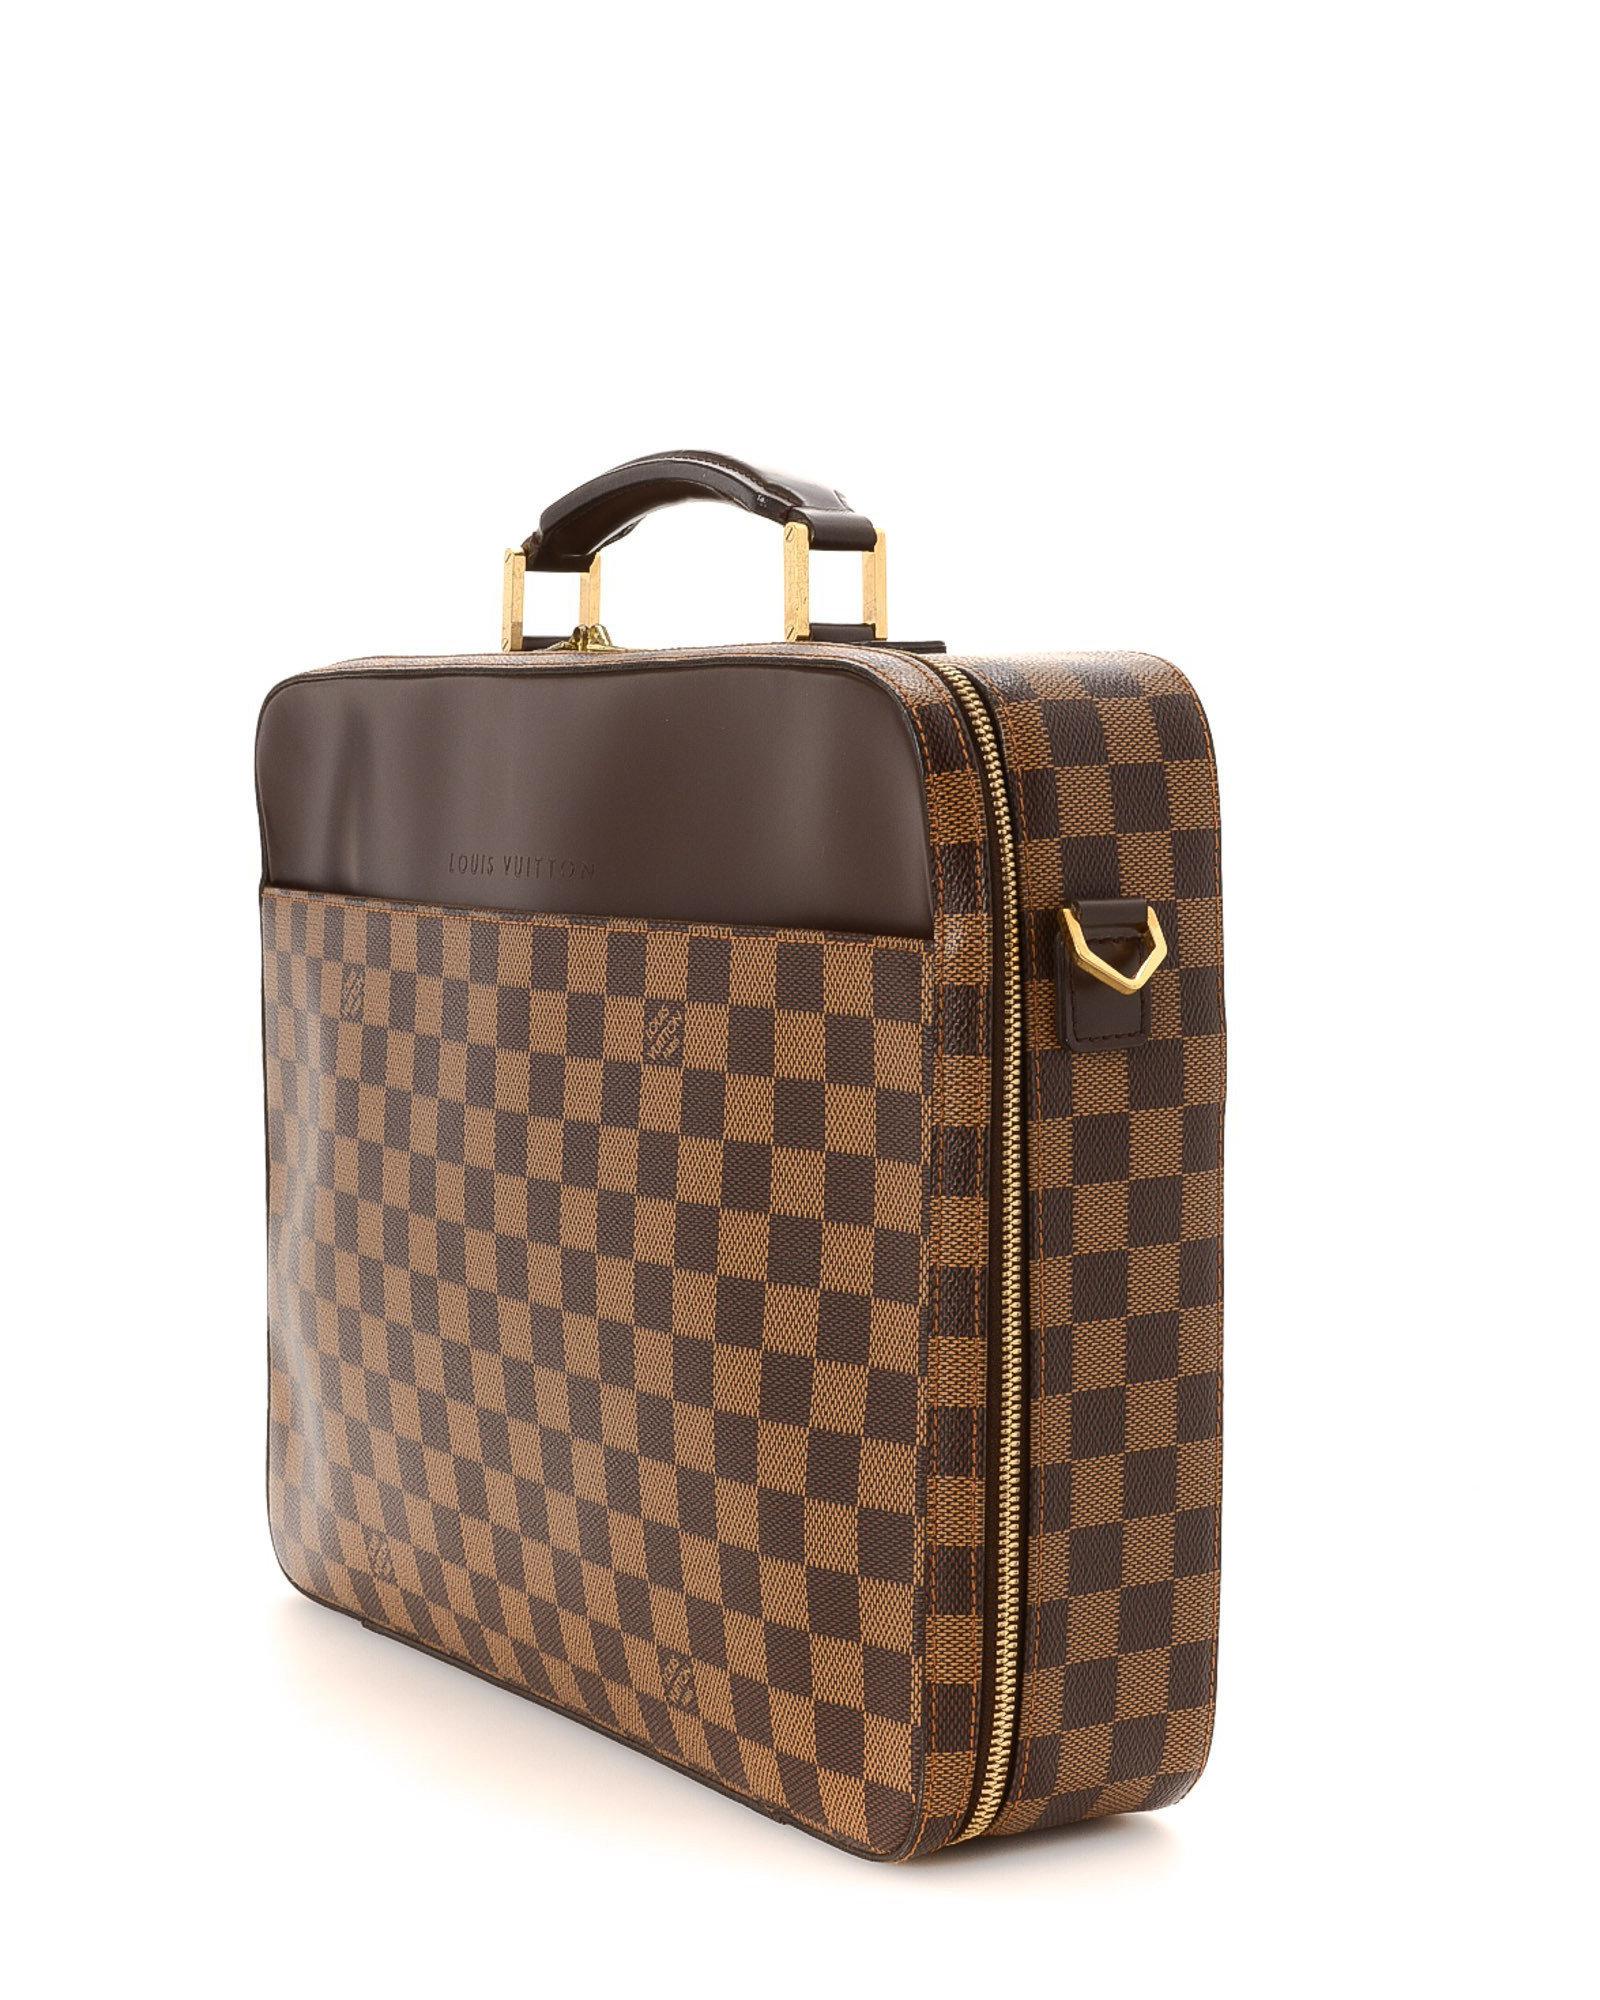 Louis Vuitton Canvas Damier Ebene Sabana Laptop Case - Vintage in Brown for Men - Lyst